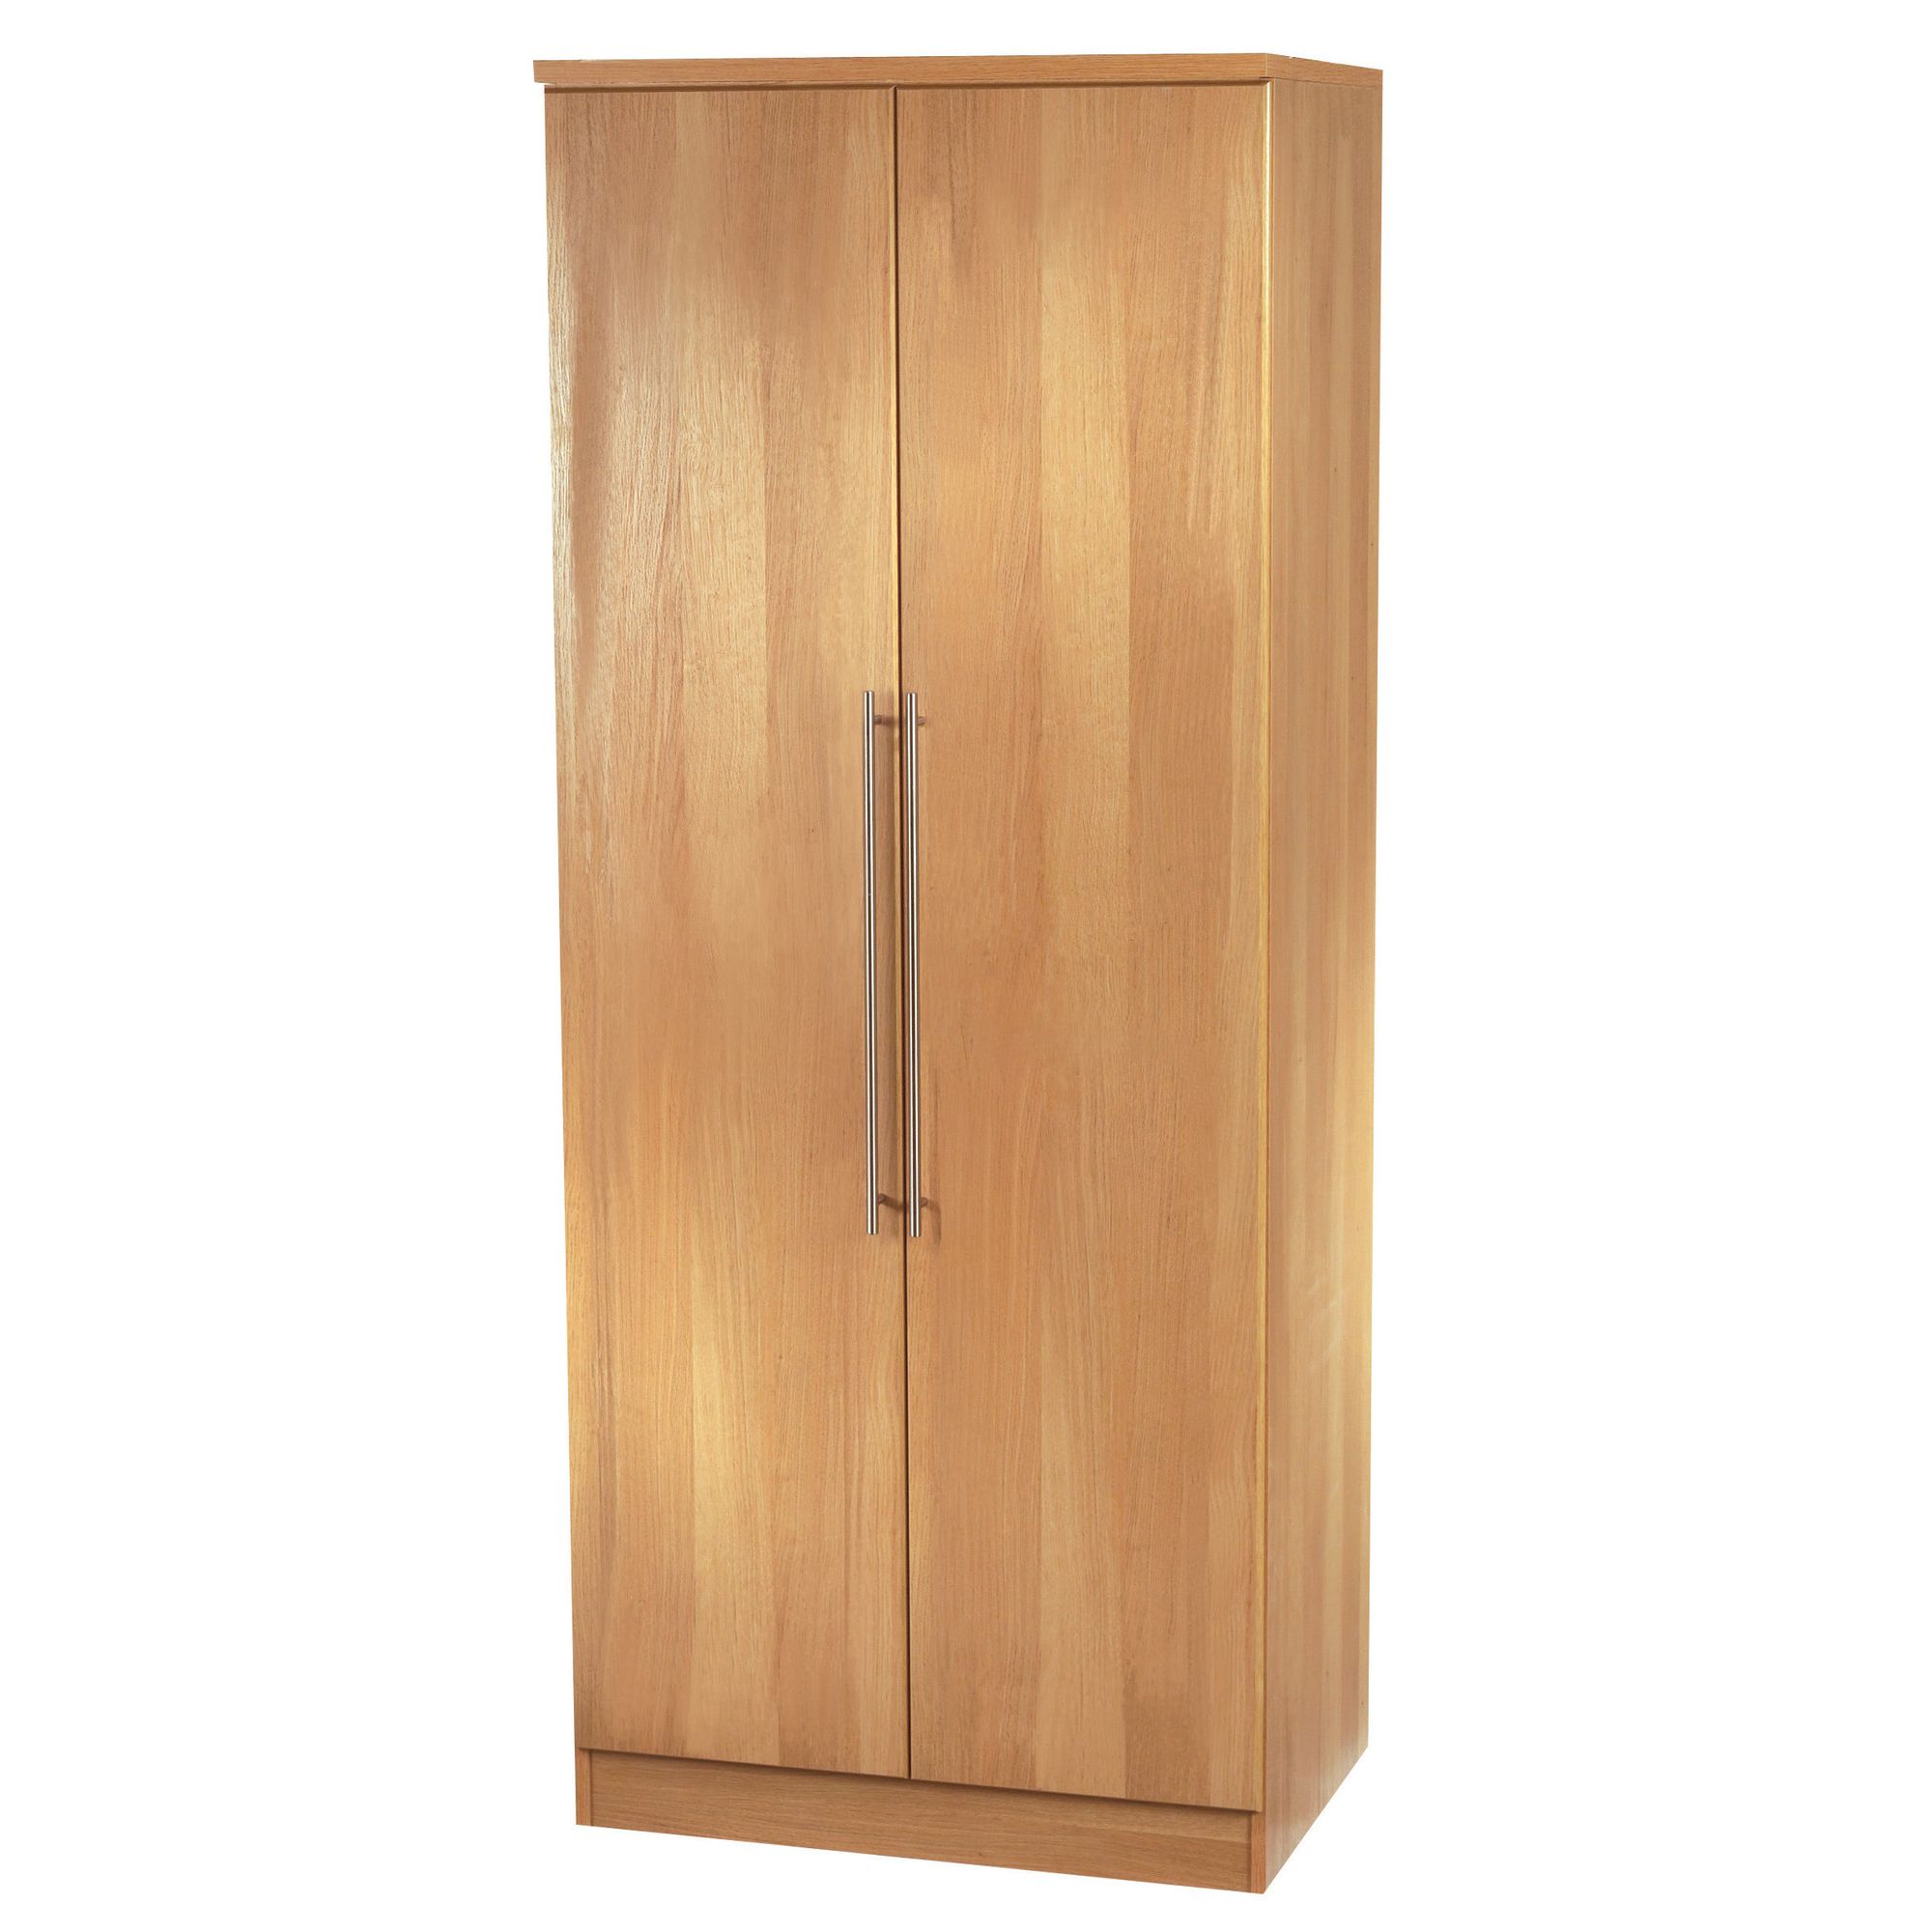 Welcome Furniture Sherwood 76.2 cm Plain Midi Wardrobe - English Oak at Tesco Direct